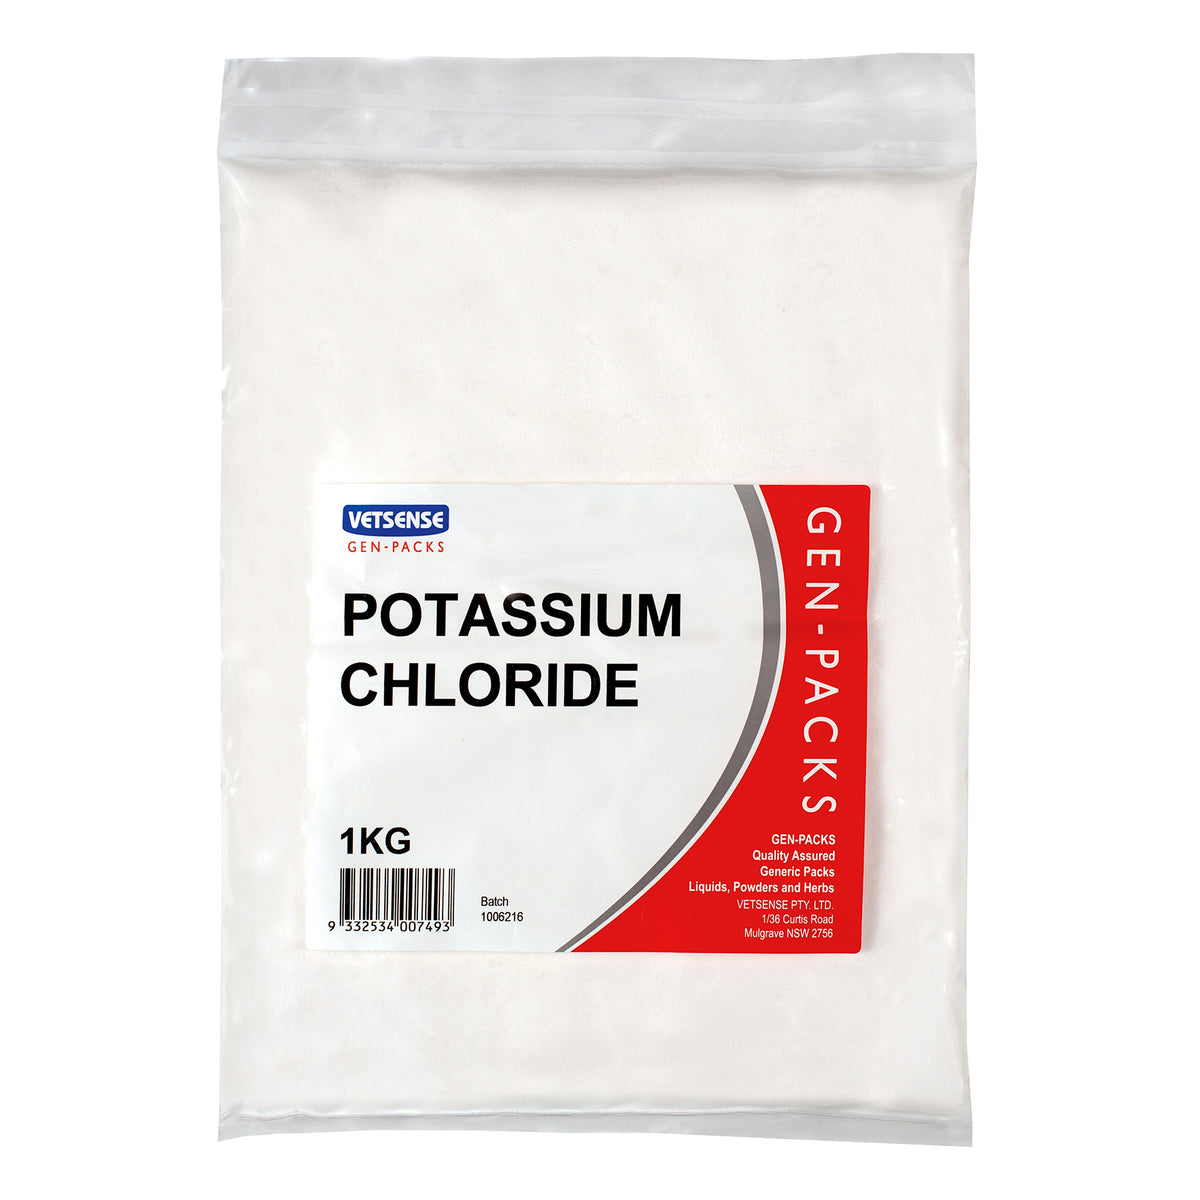 Vetsense Gen Packs Potassium Chloride